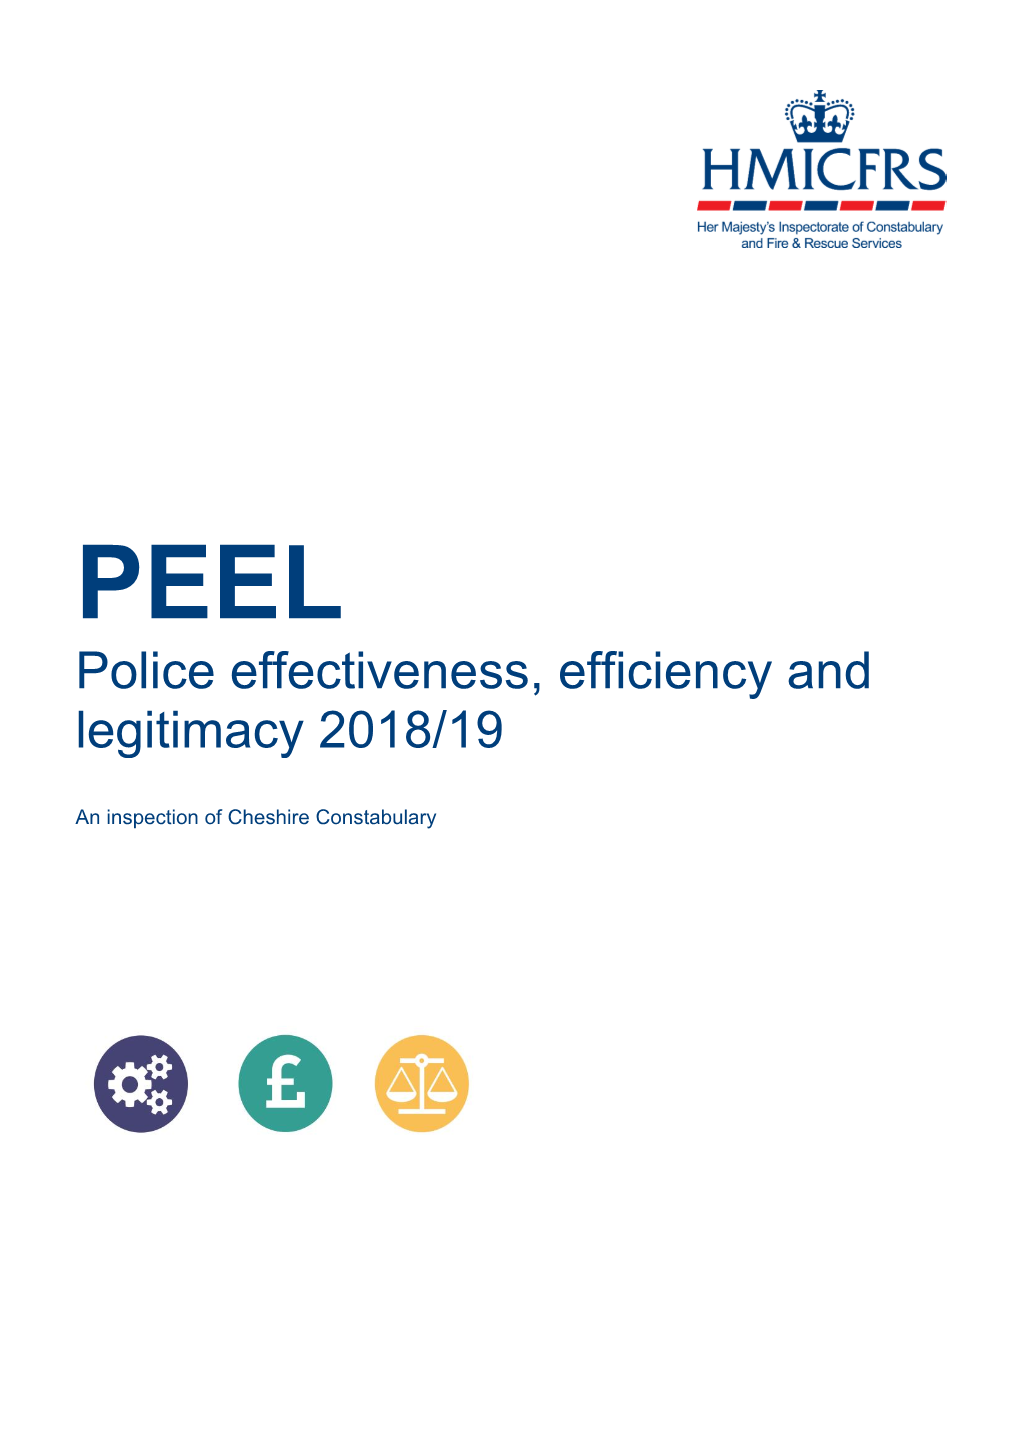 Police Effectiveness, Efficiency and Legitimacy 2018/19 – Cheshire